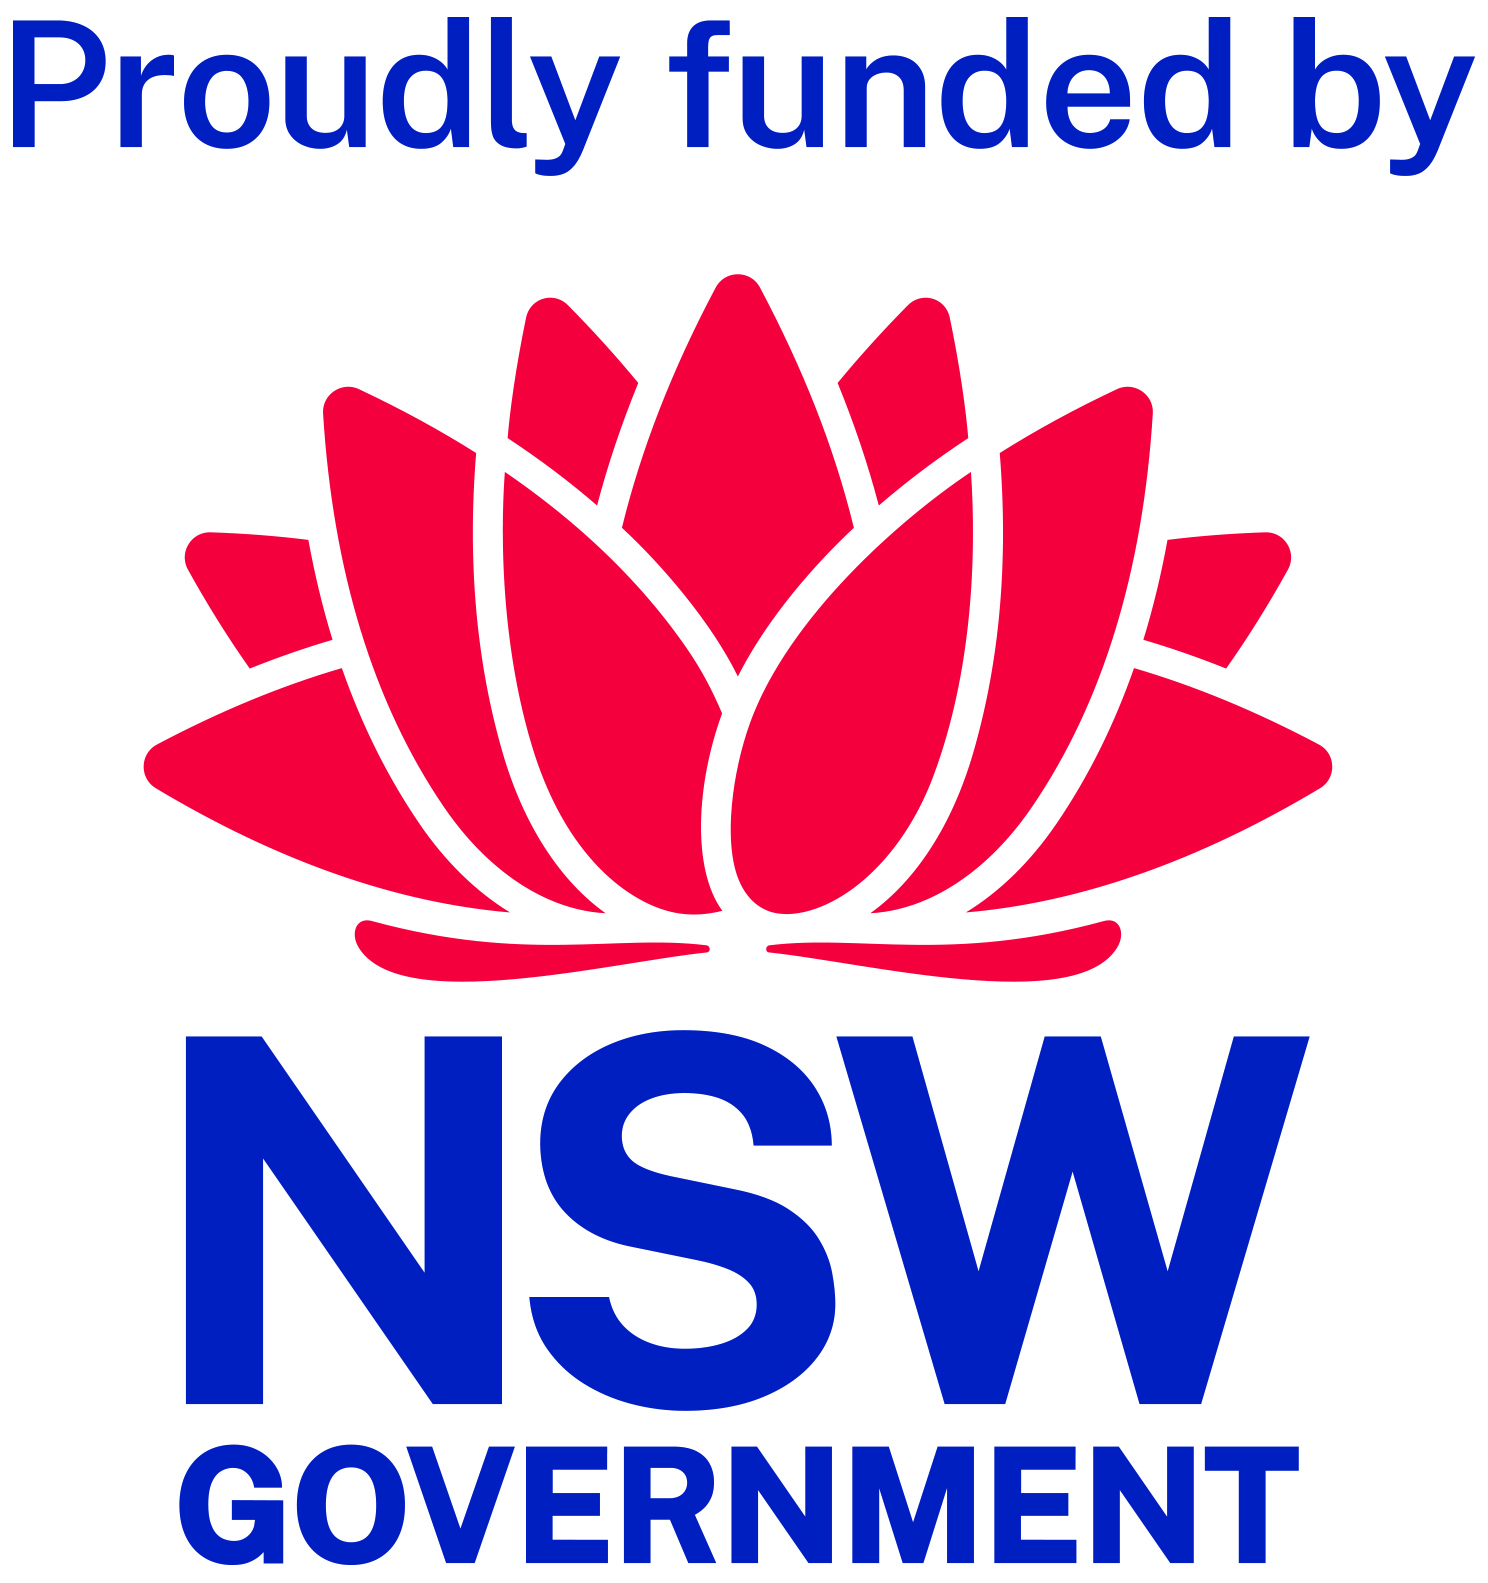 NSW Gov funded